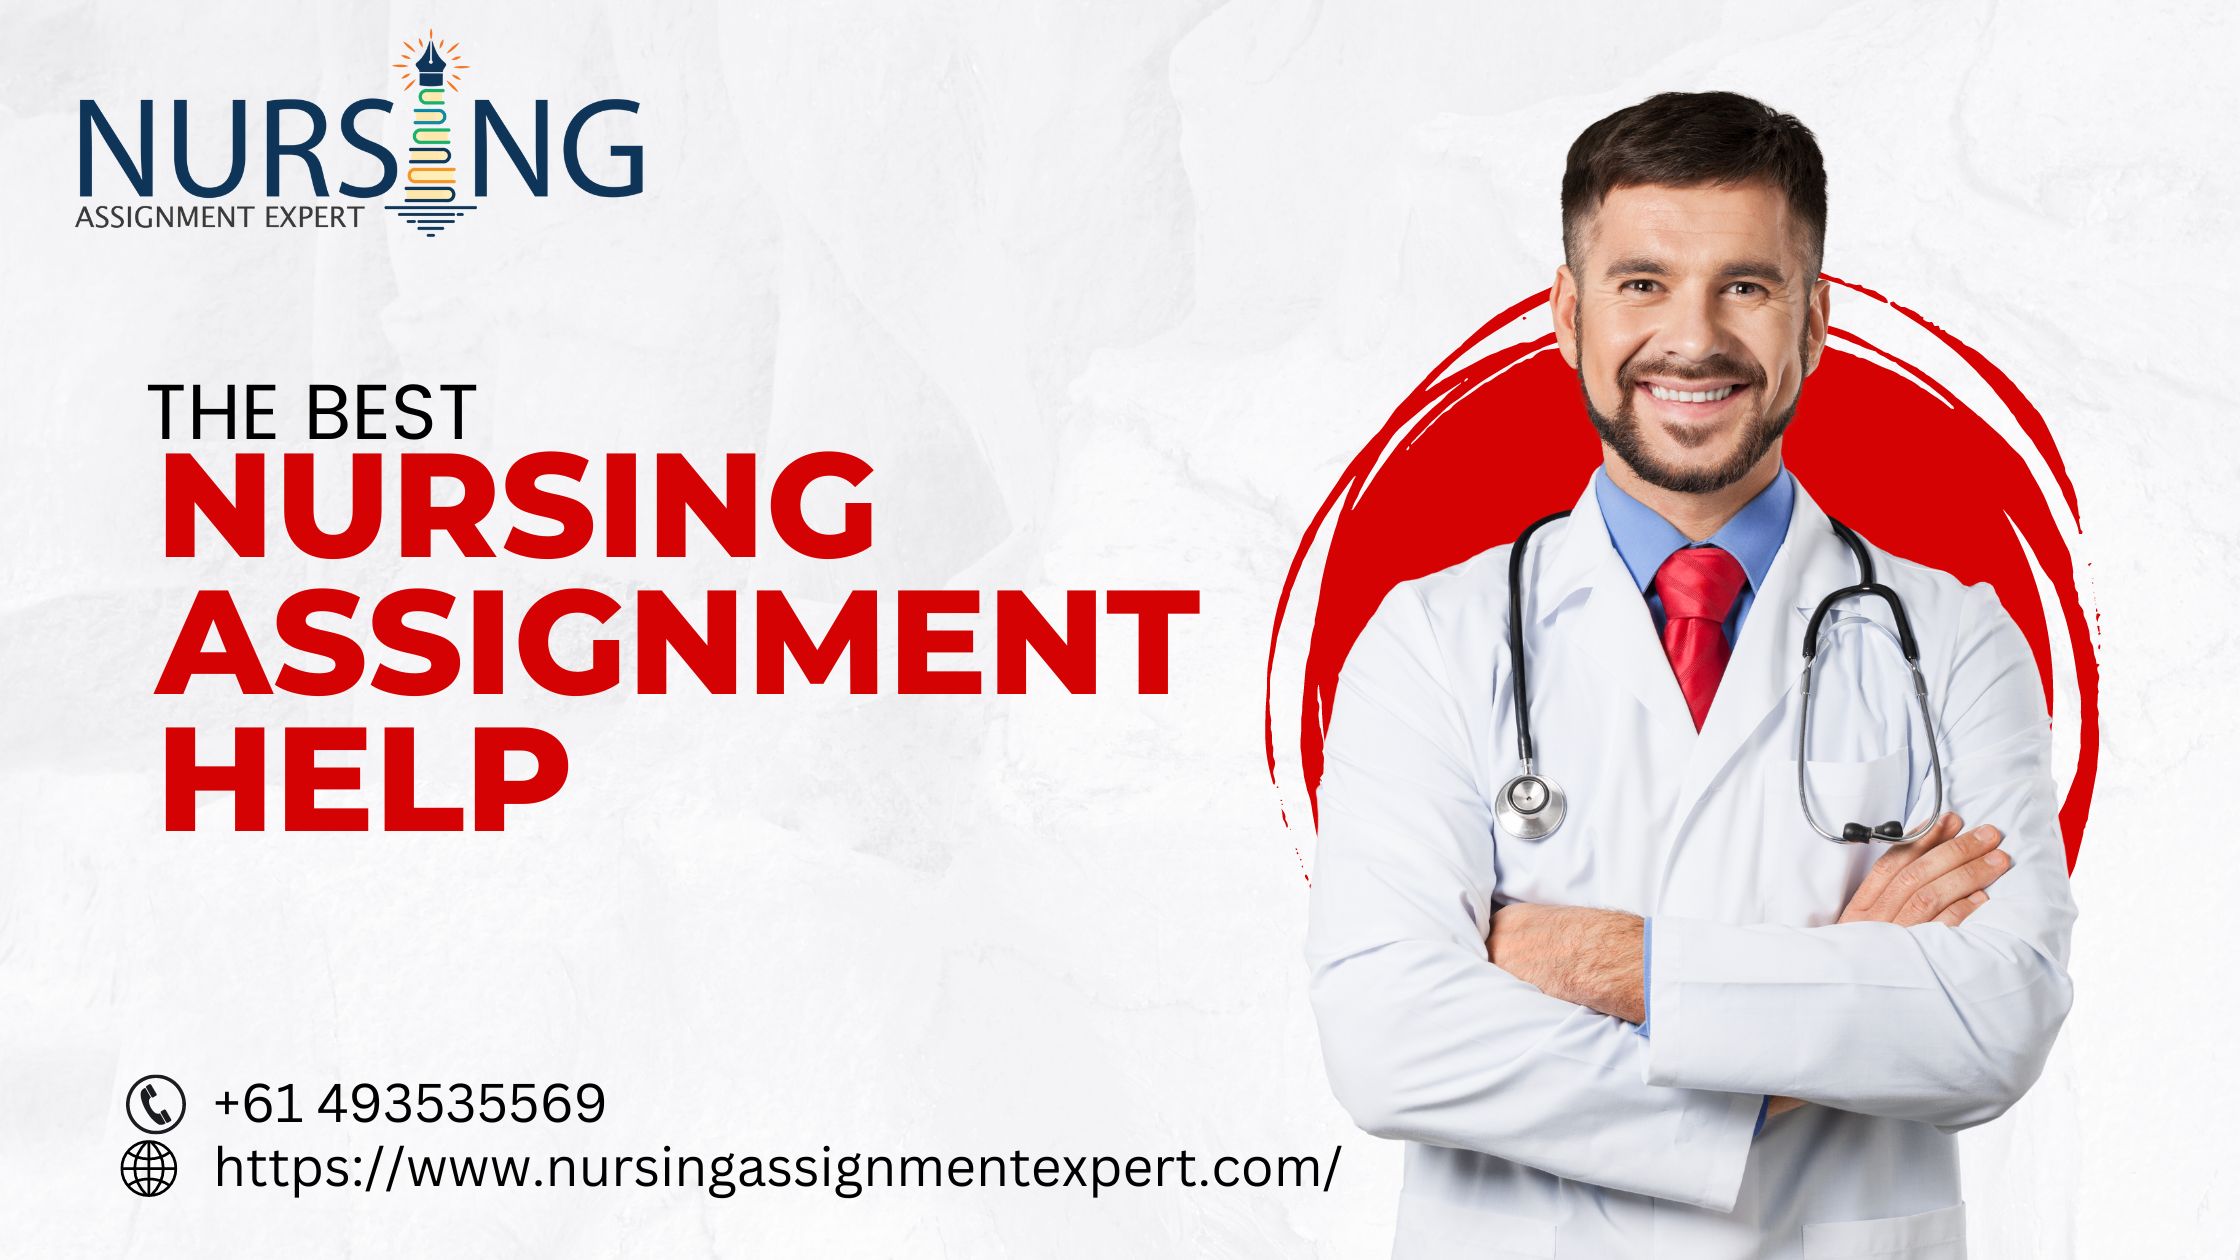 Nursing Assignment Expert – Professional Help for Nursing Assignments